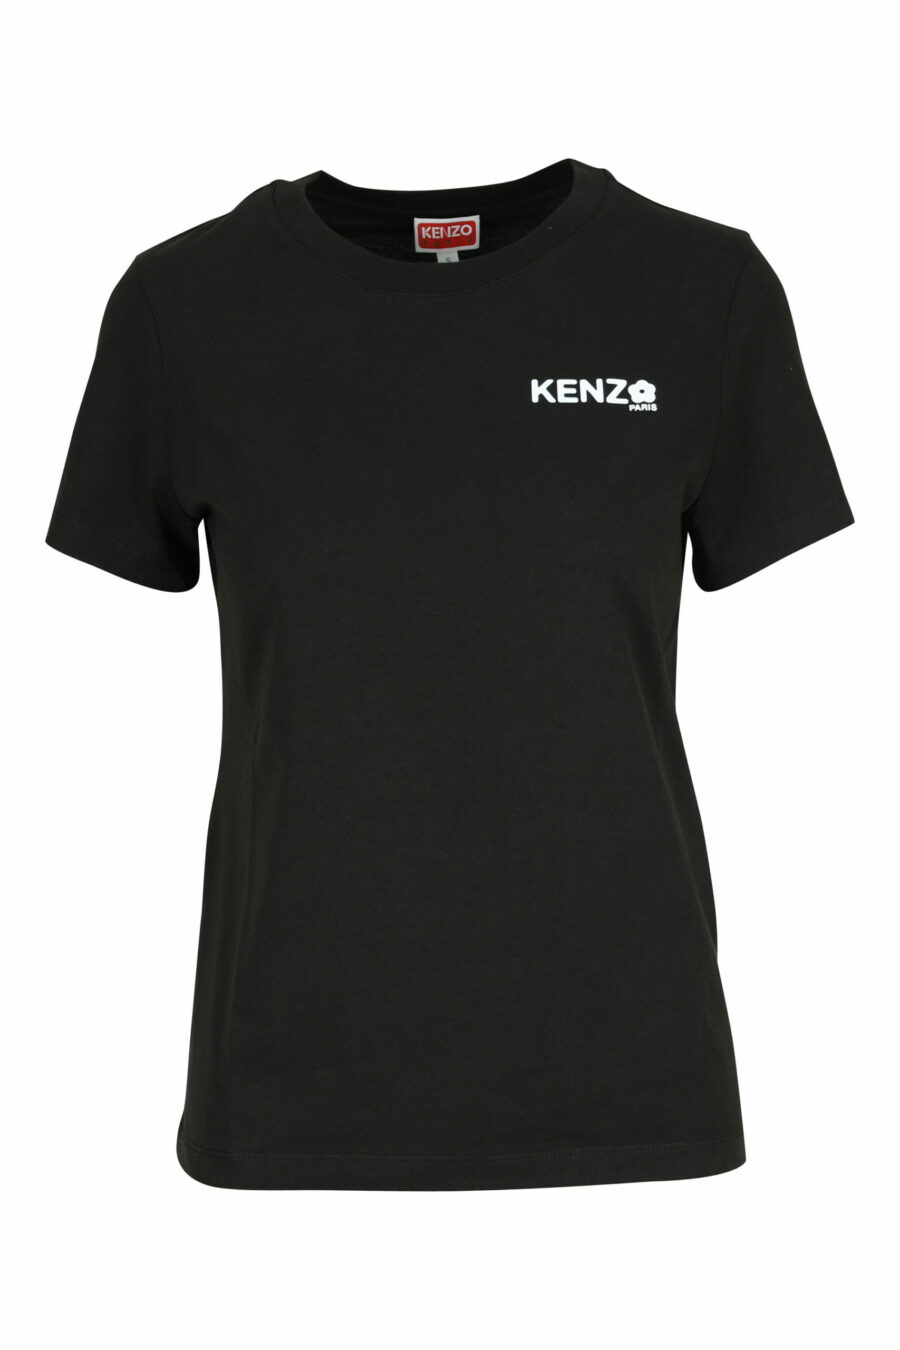 T-shirt schwarz mit weißem "kenzo boke flower" mini logo - 3612230587762 skaliert